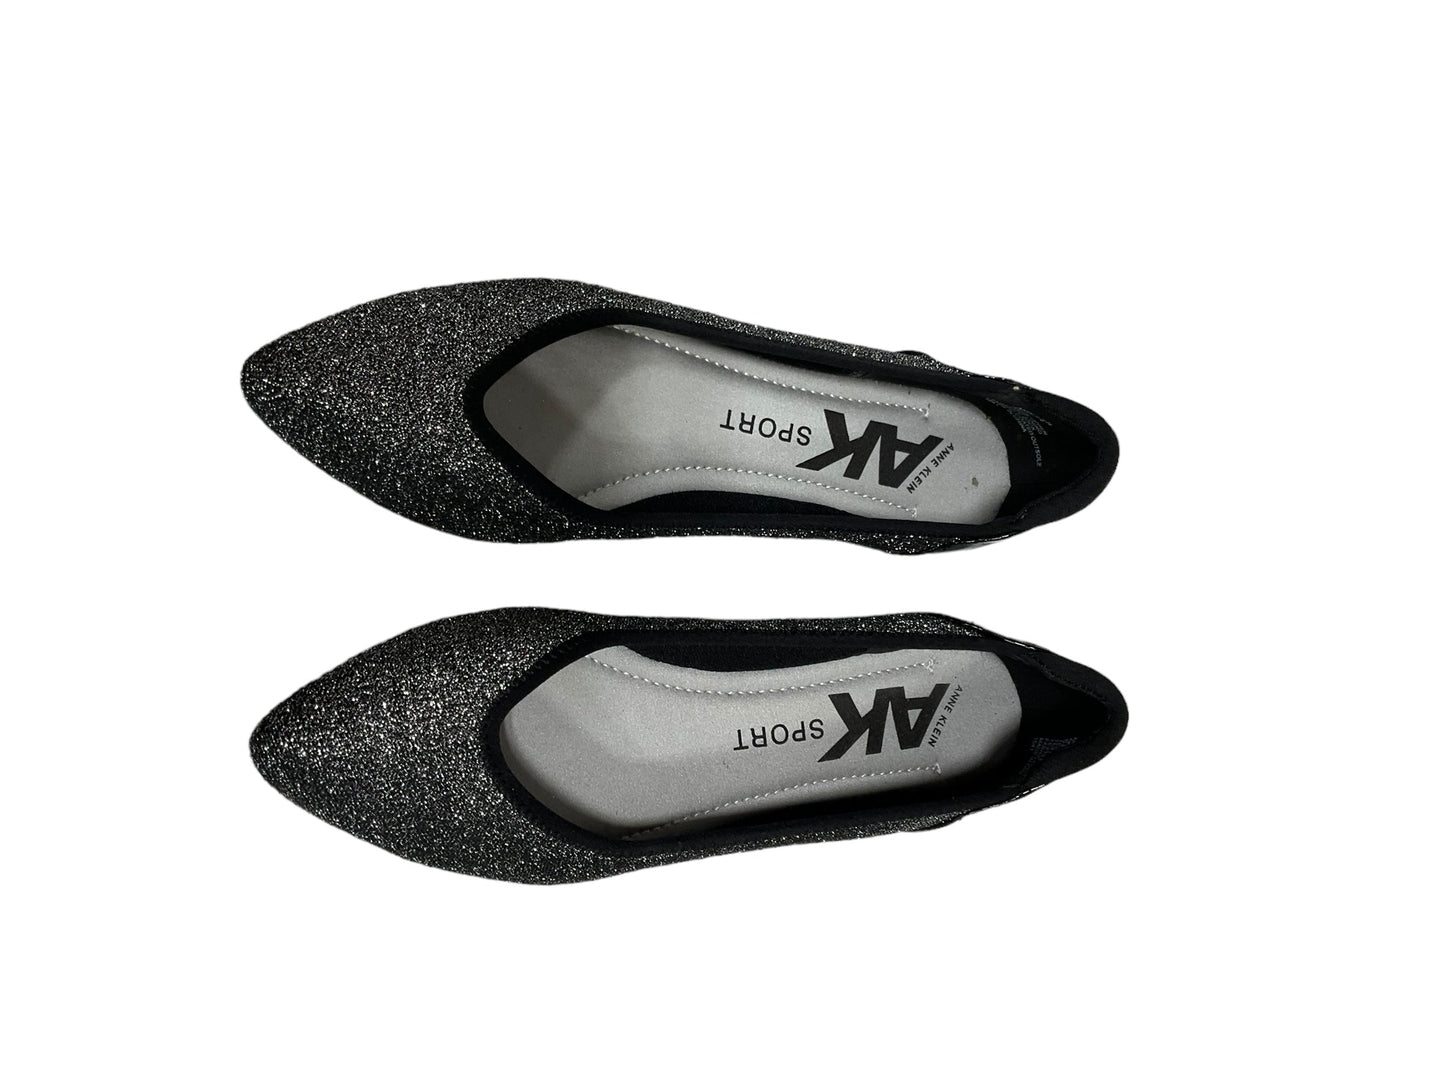 Silver Shoes Flats Anne Klein, Size 6.5